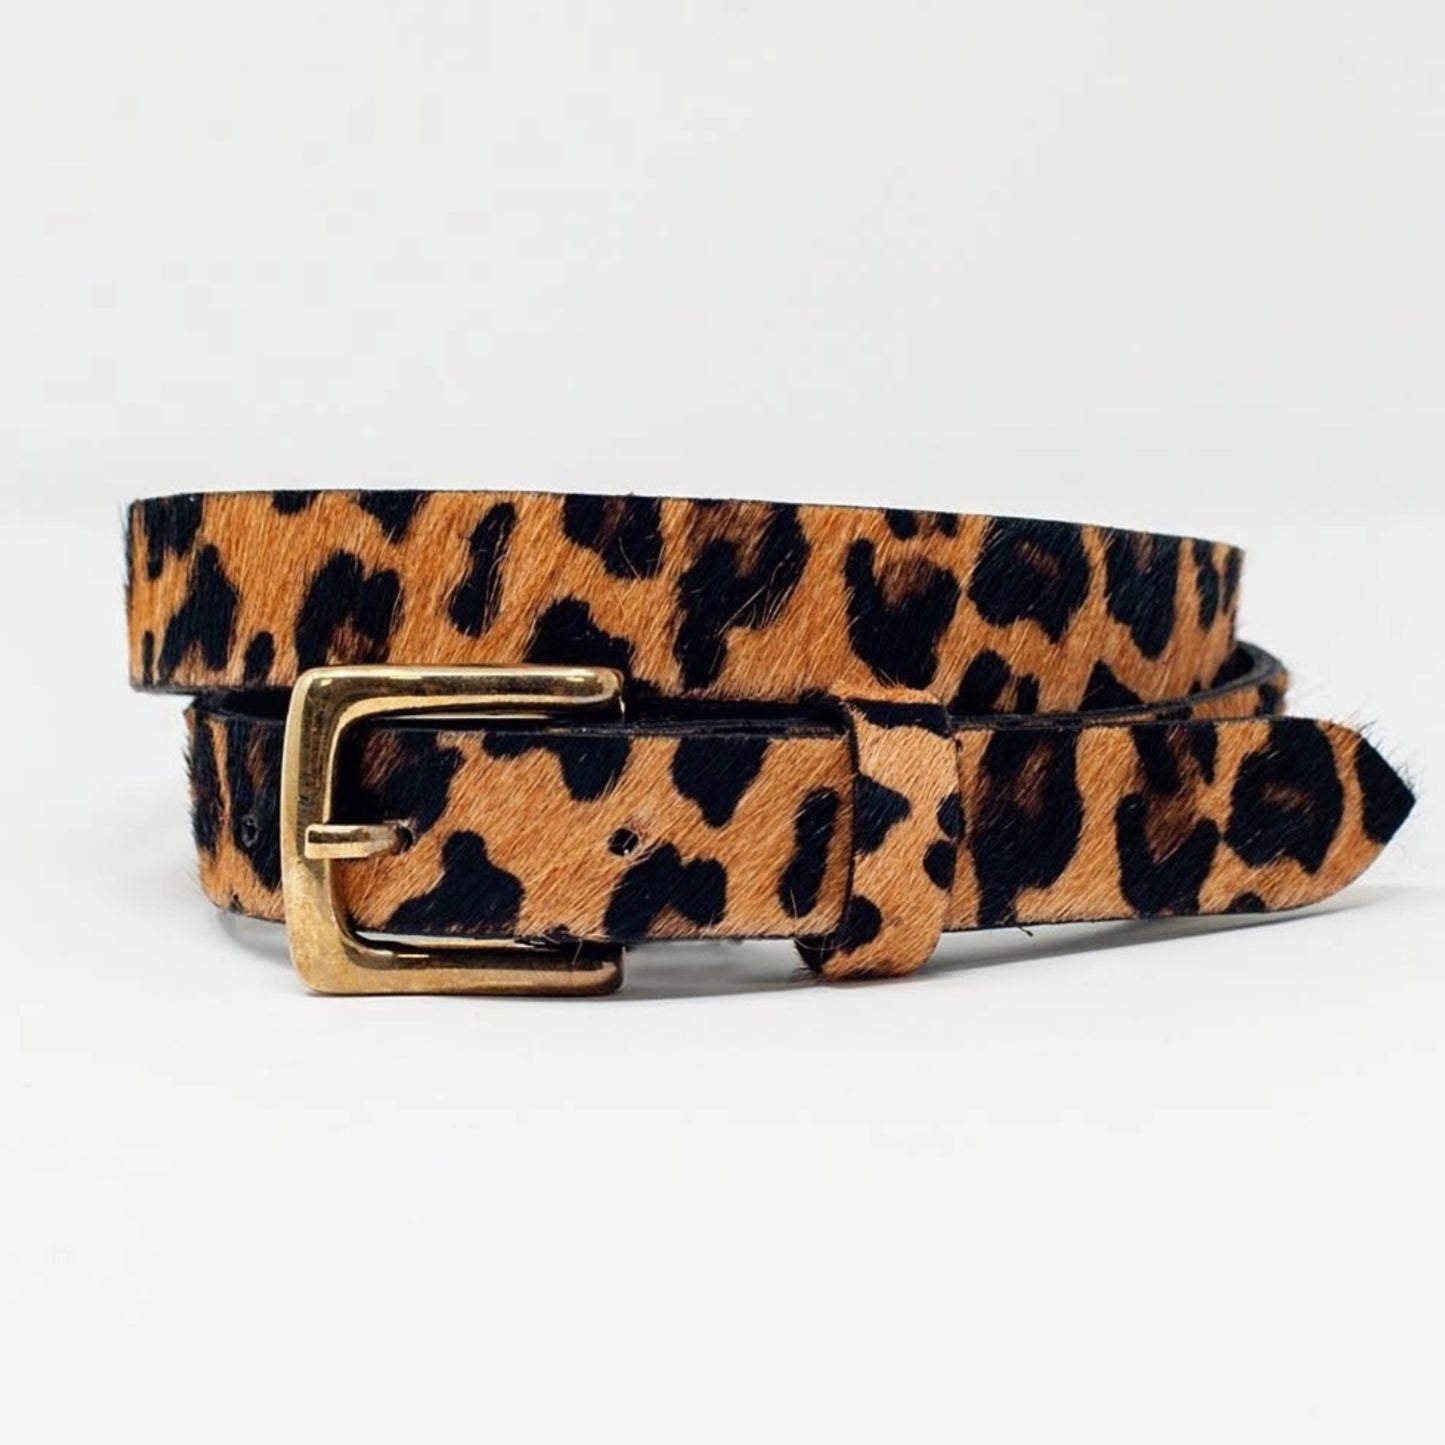 Leopard Print Belt